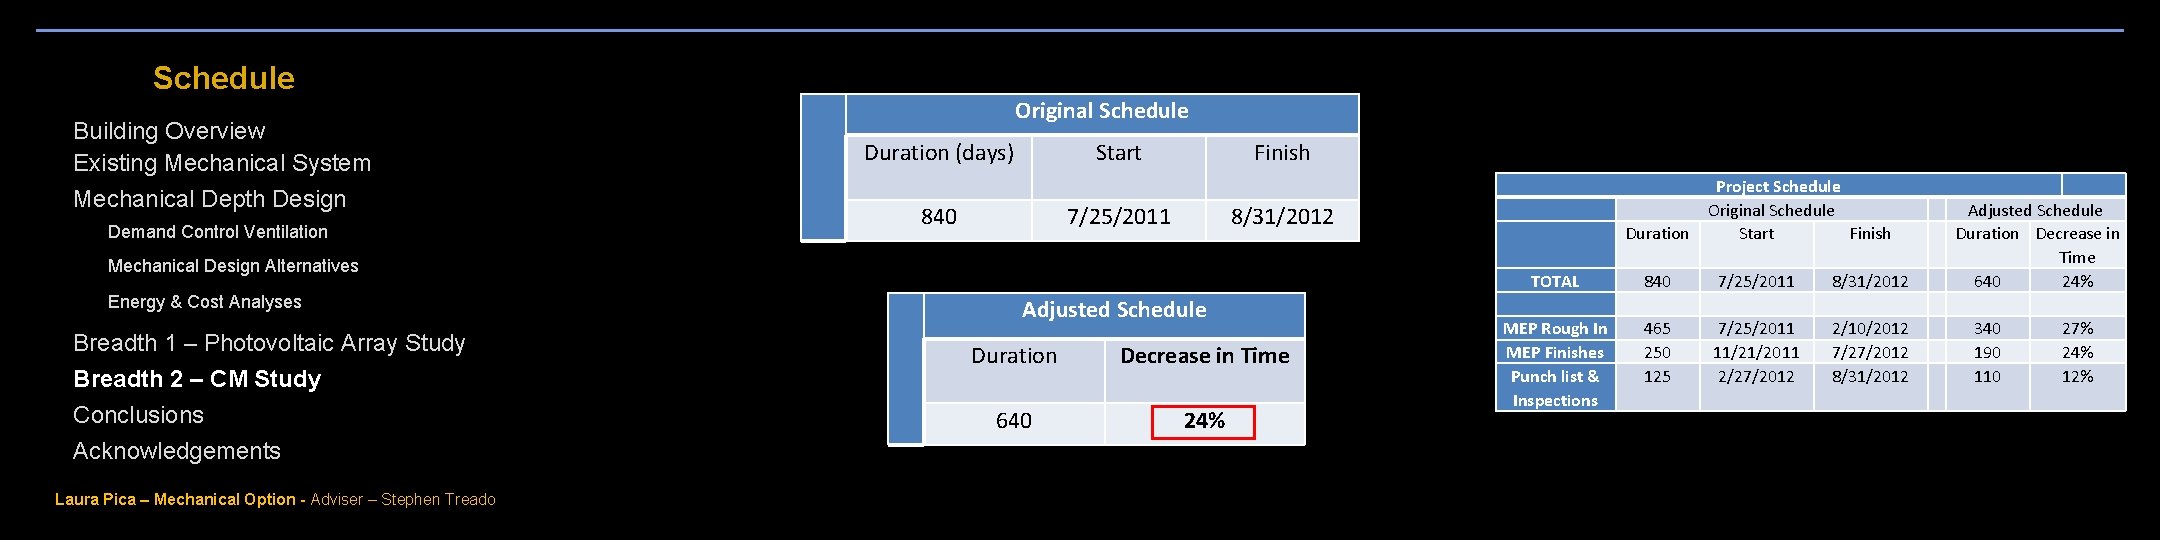 Schedule Building Overview Existing Mechanical System Original Schedule Duration (days) Mechanical Depth Design Start